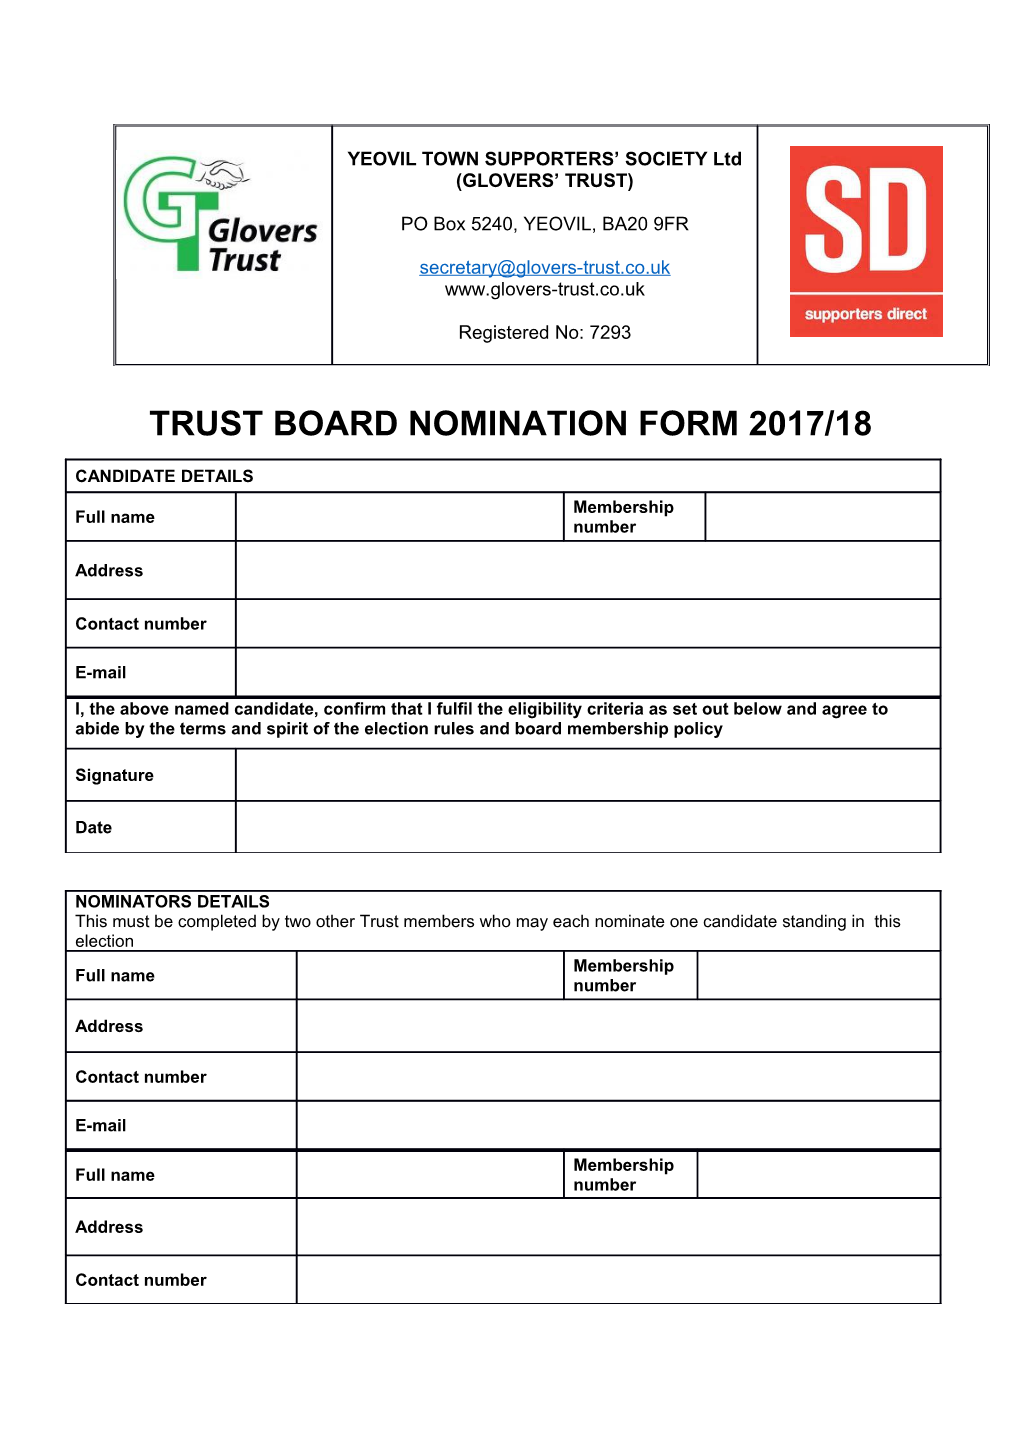 Trust Board Nomination Form 2017/18